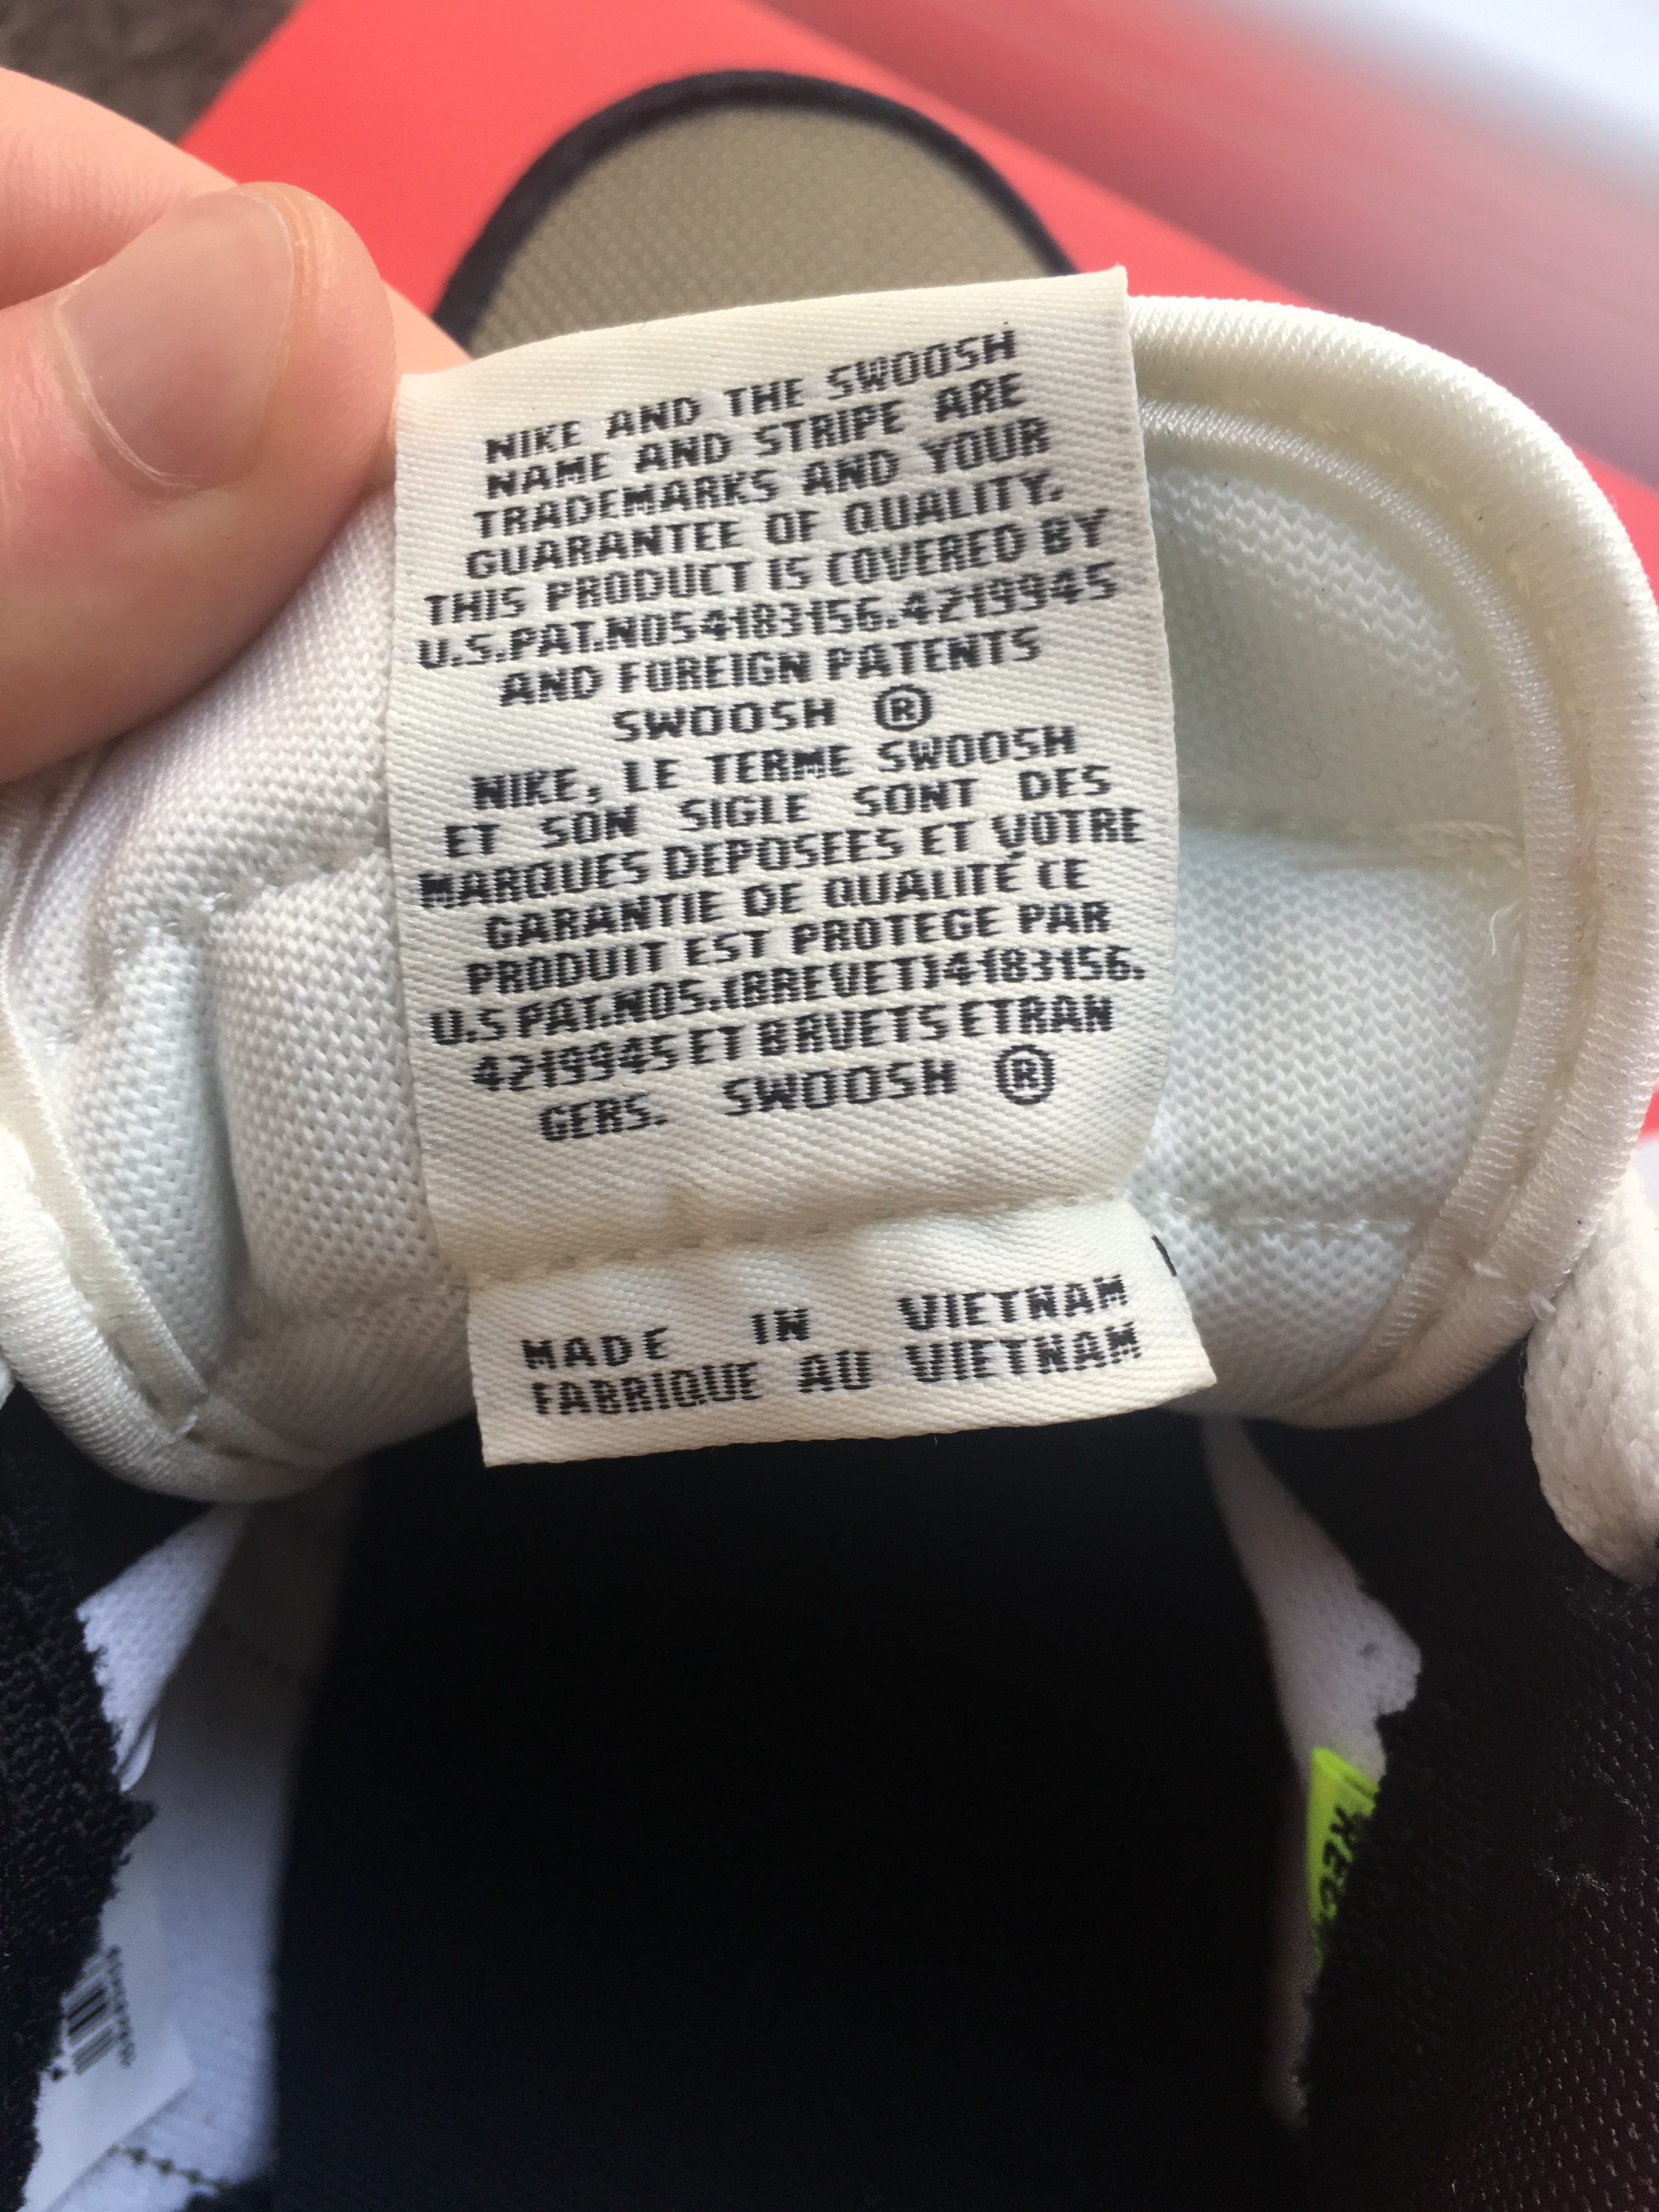 Кроссовки Nike, все модели с описанием, отличия оригинала от подделки